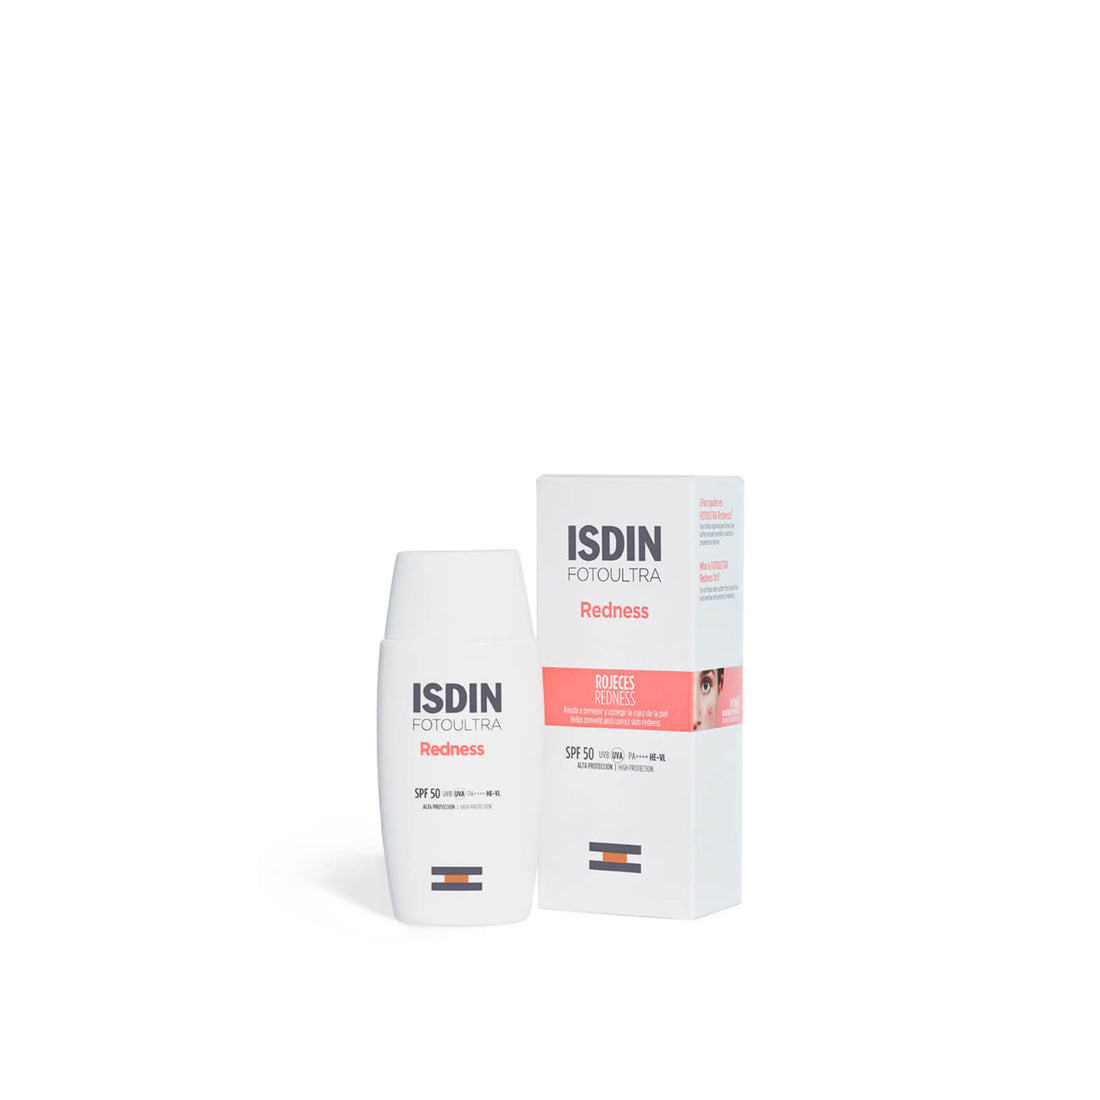 ISDIN FotoUltra Redness Facial Sunscreen SPF50 PA++++ 50ml